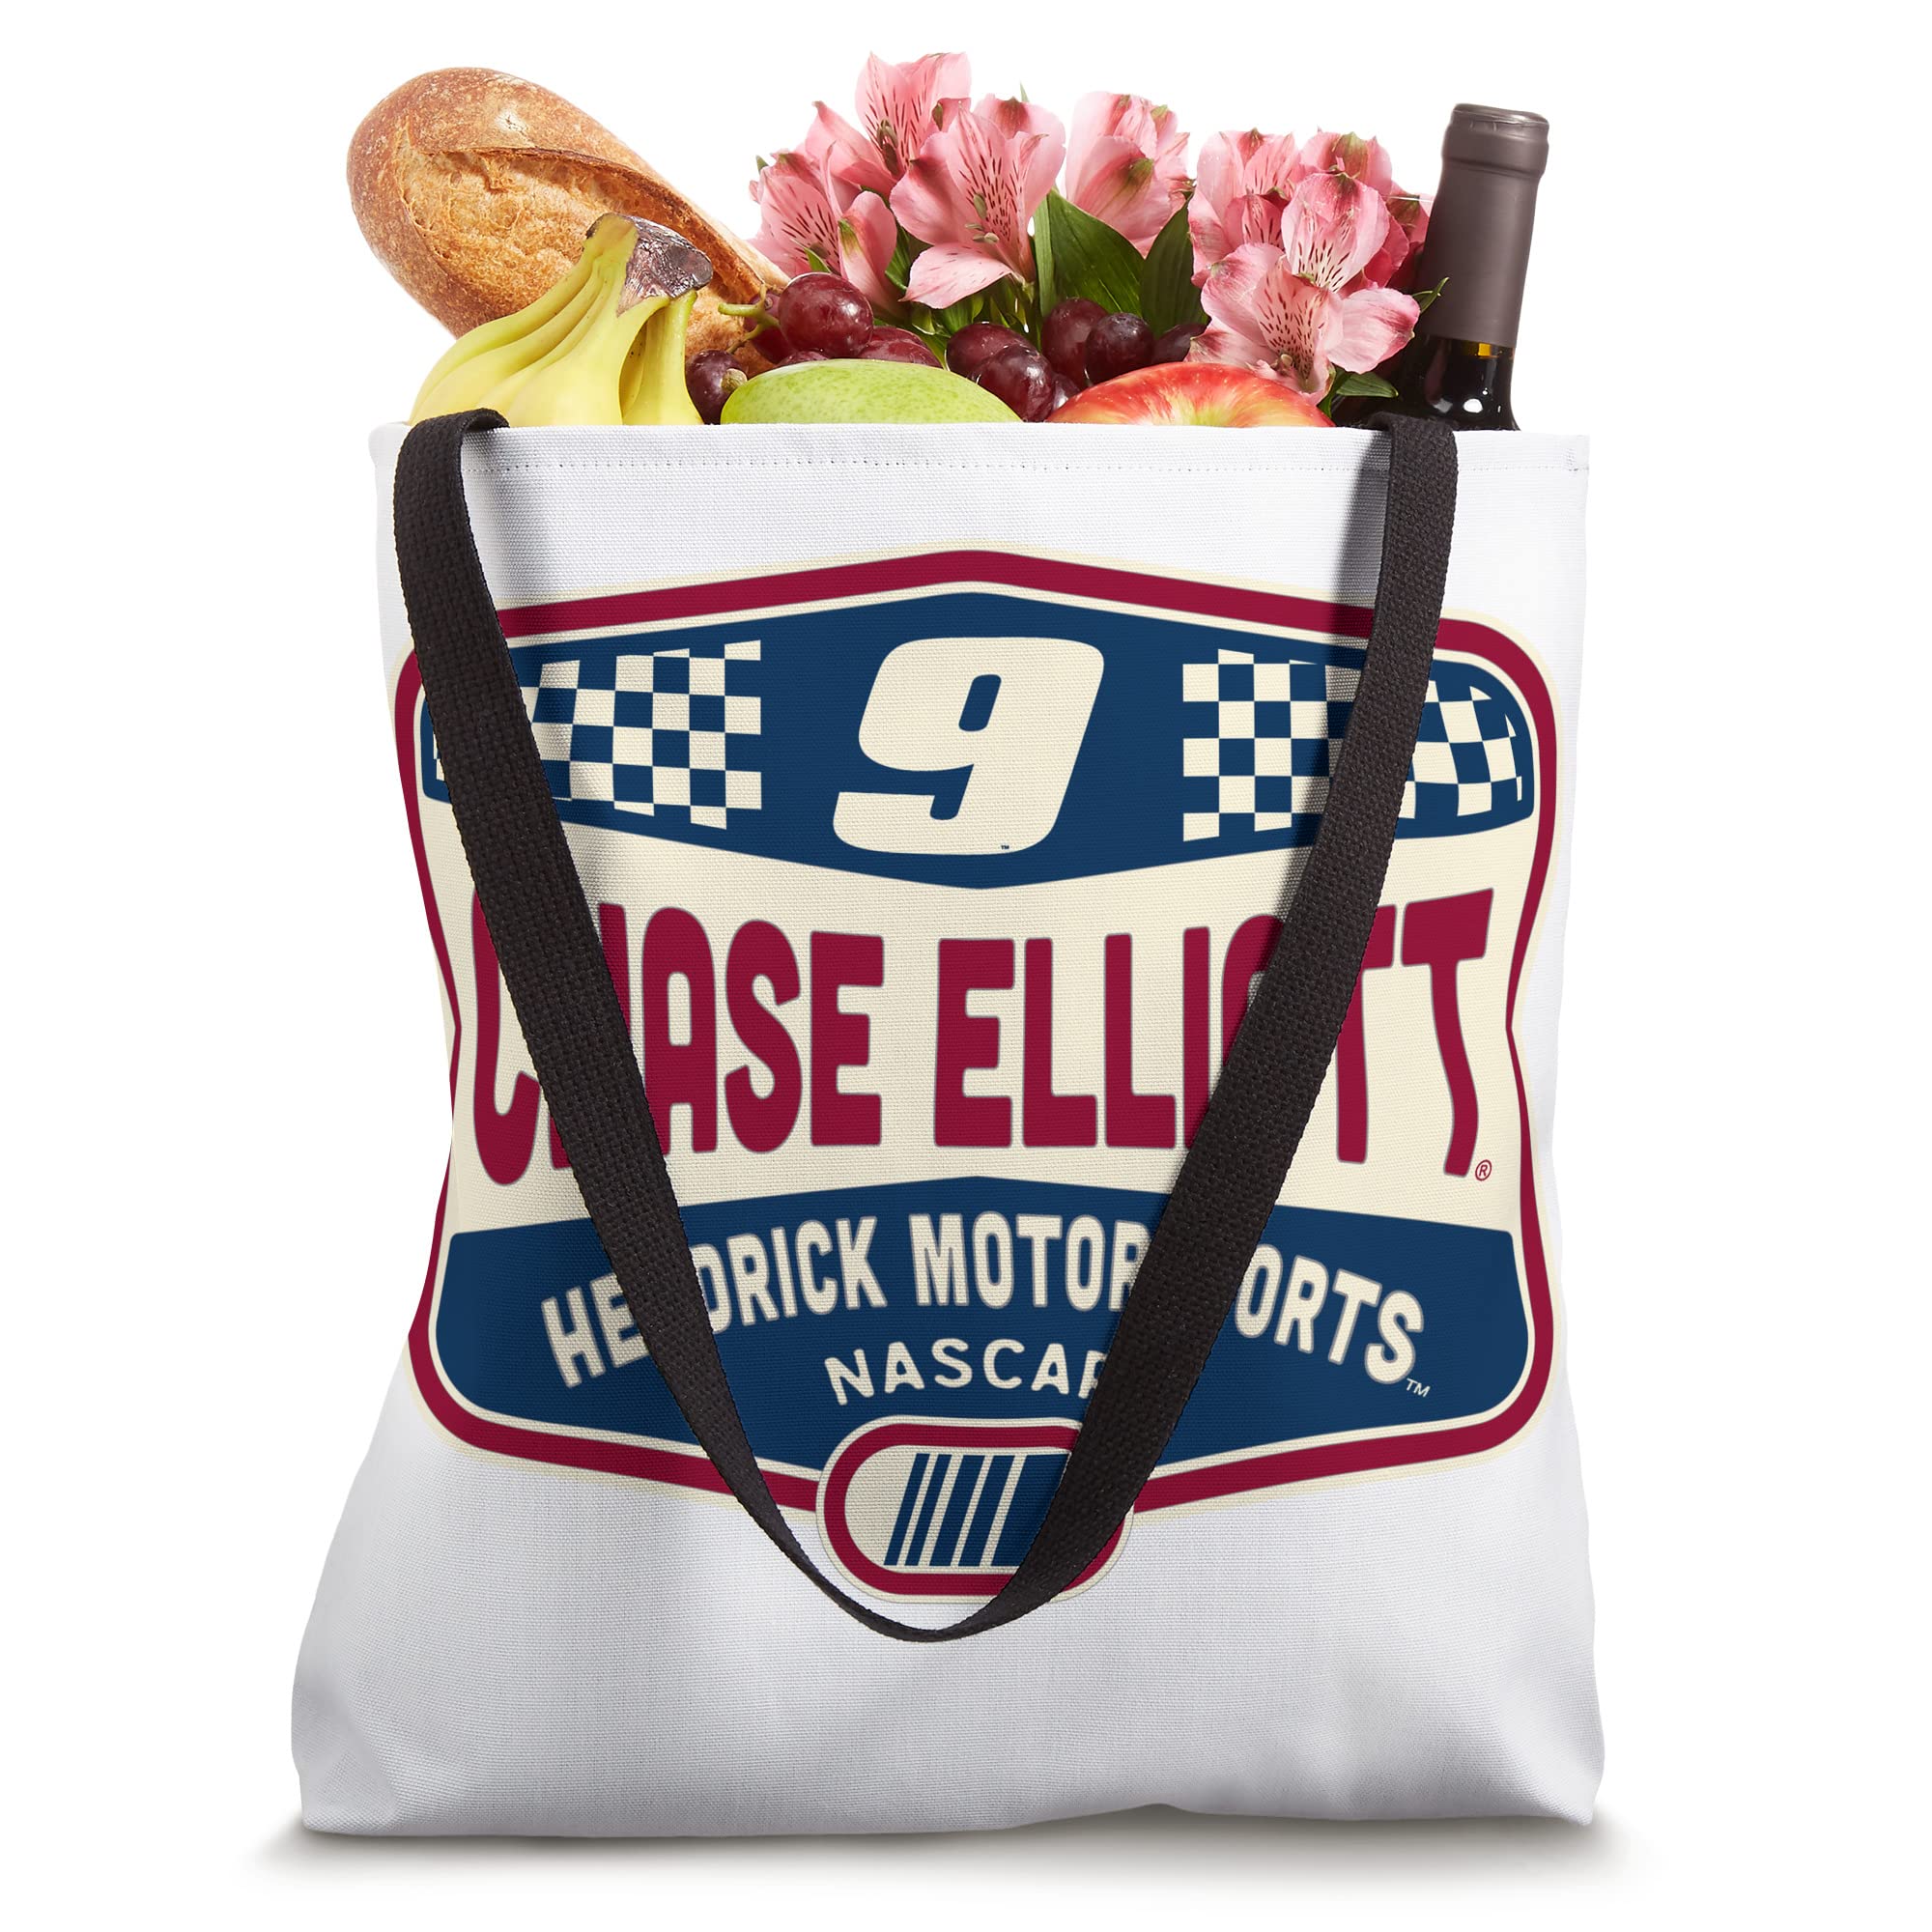 NASCAR - CHASE ELLIOTT SHIELD Tote Bag